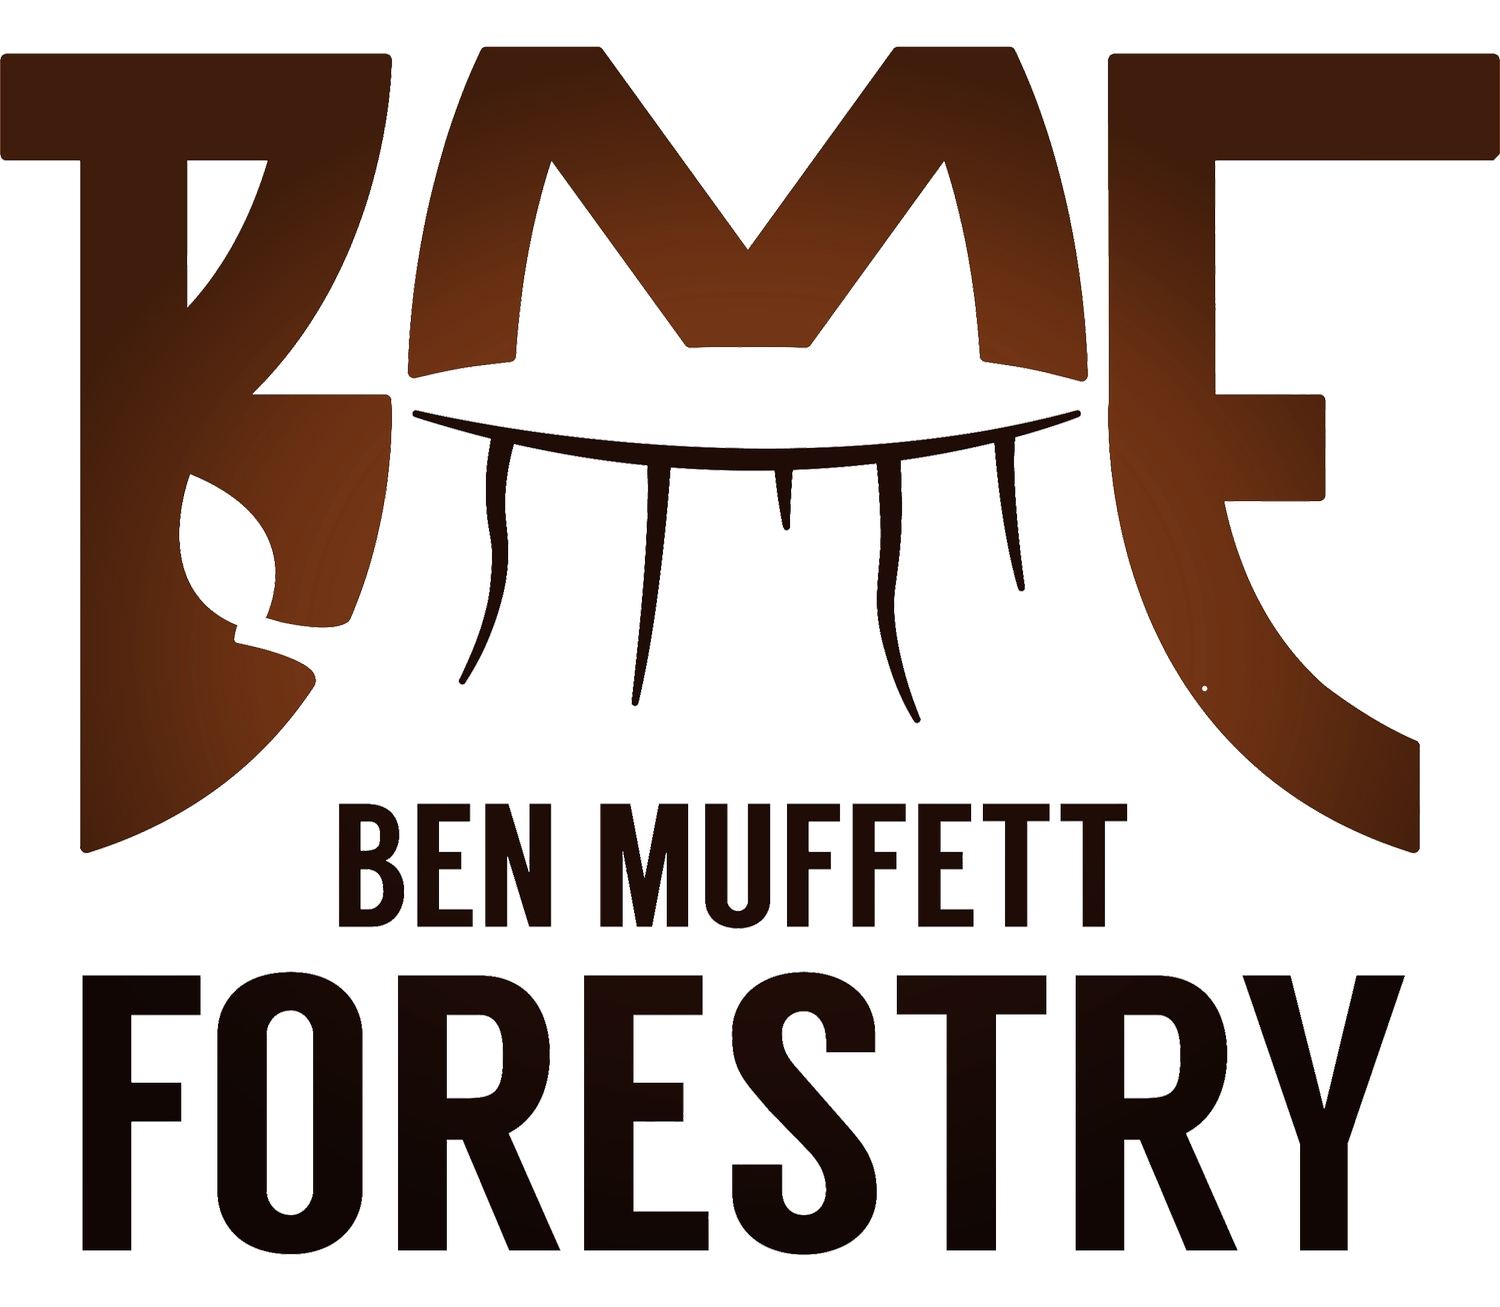 Ben Muffett Forestry stump grinding stump removal